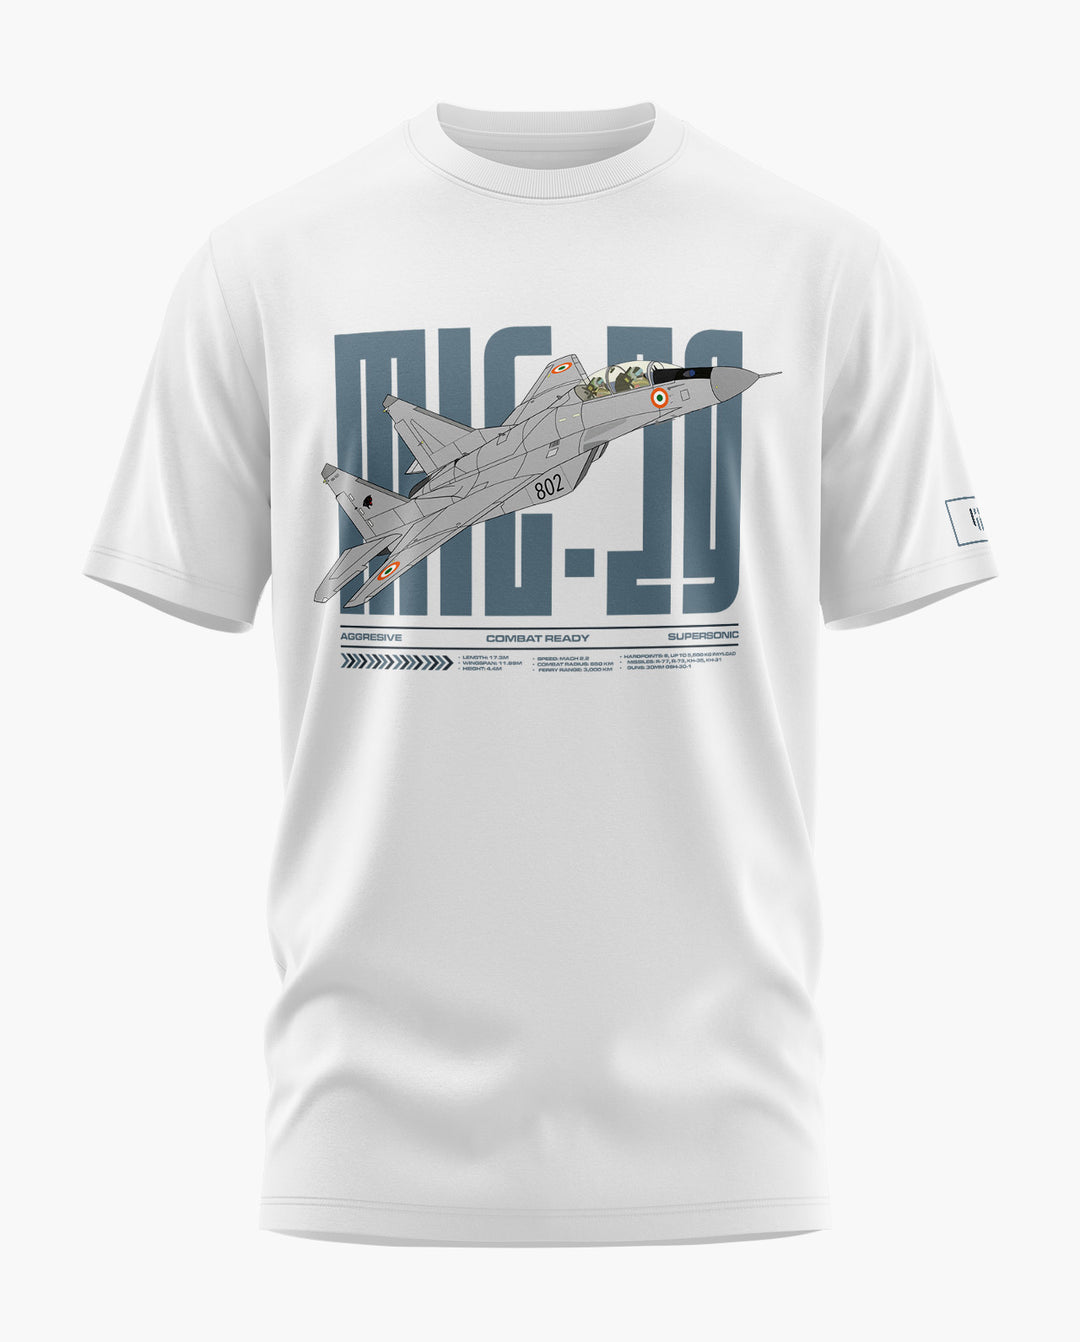 MIG-29K ULTIMATE T-Shirt